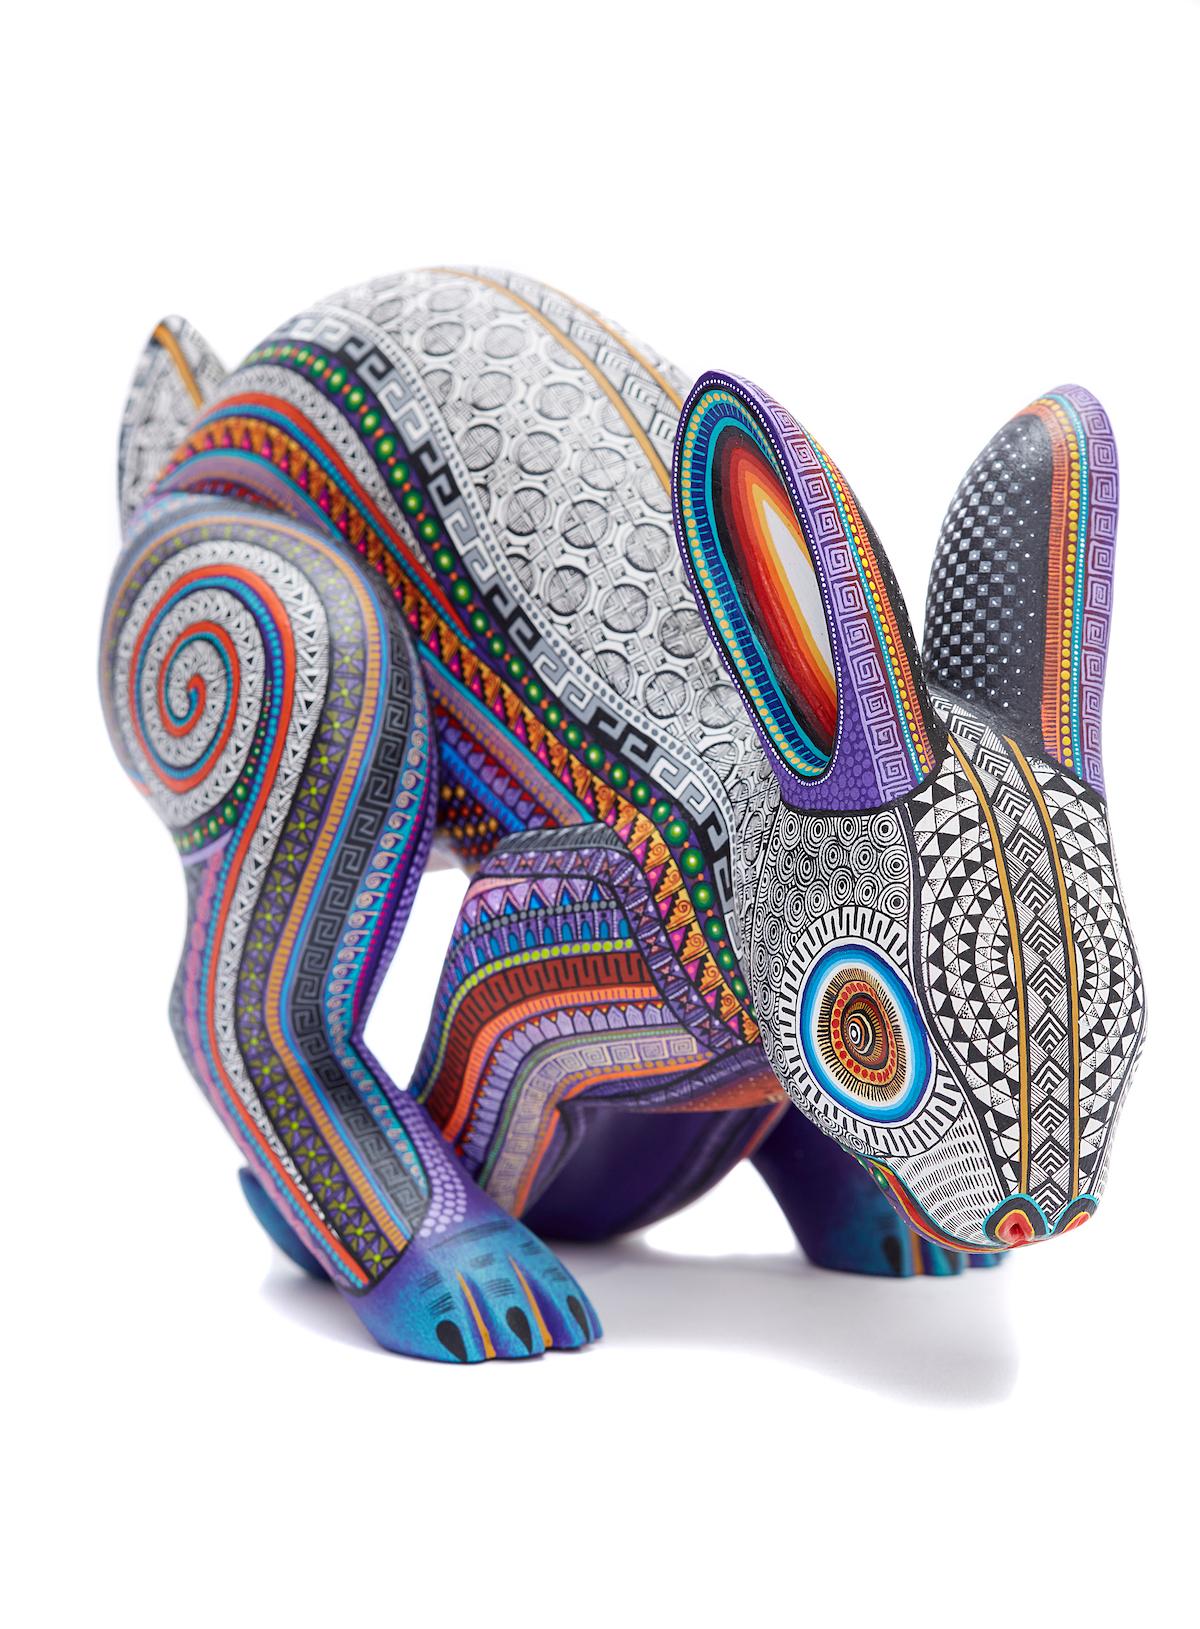 Conejo Contento - Happy Rabbit - Mexican Folk Art  Cactus Fine Art 2